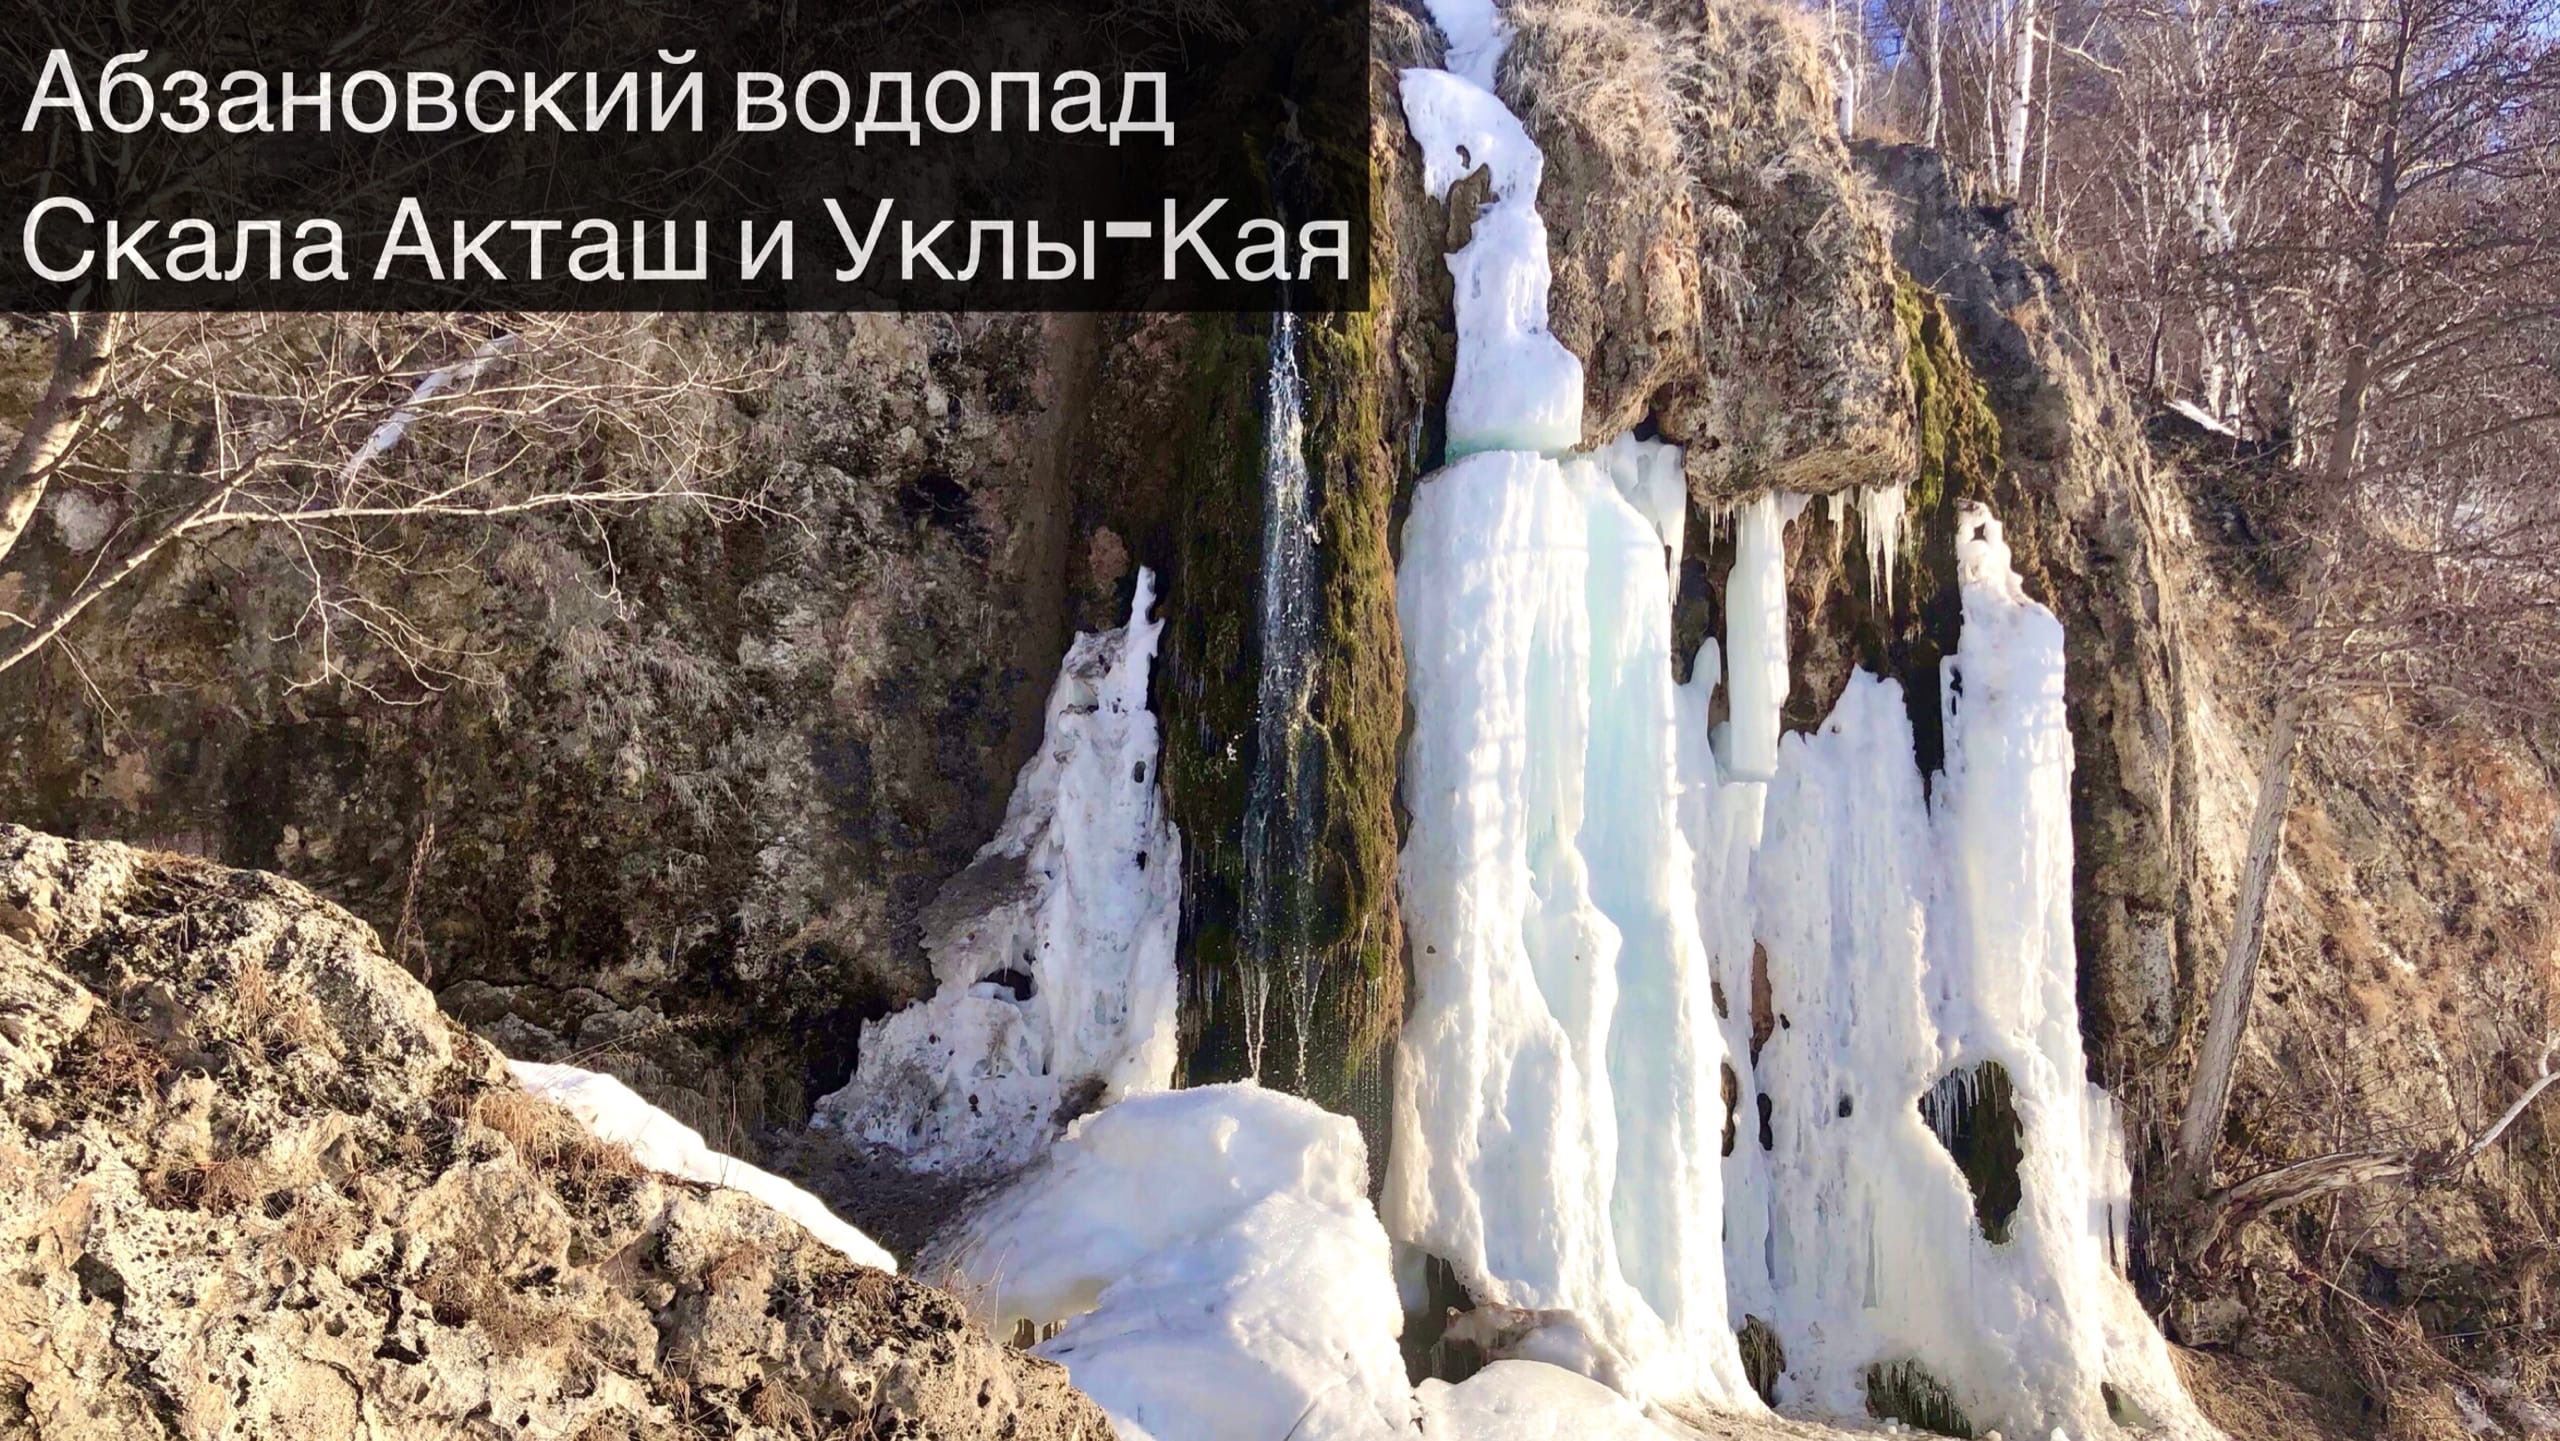 Абзановский водопад зимой скалы